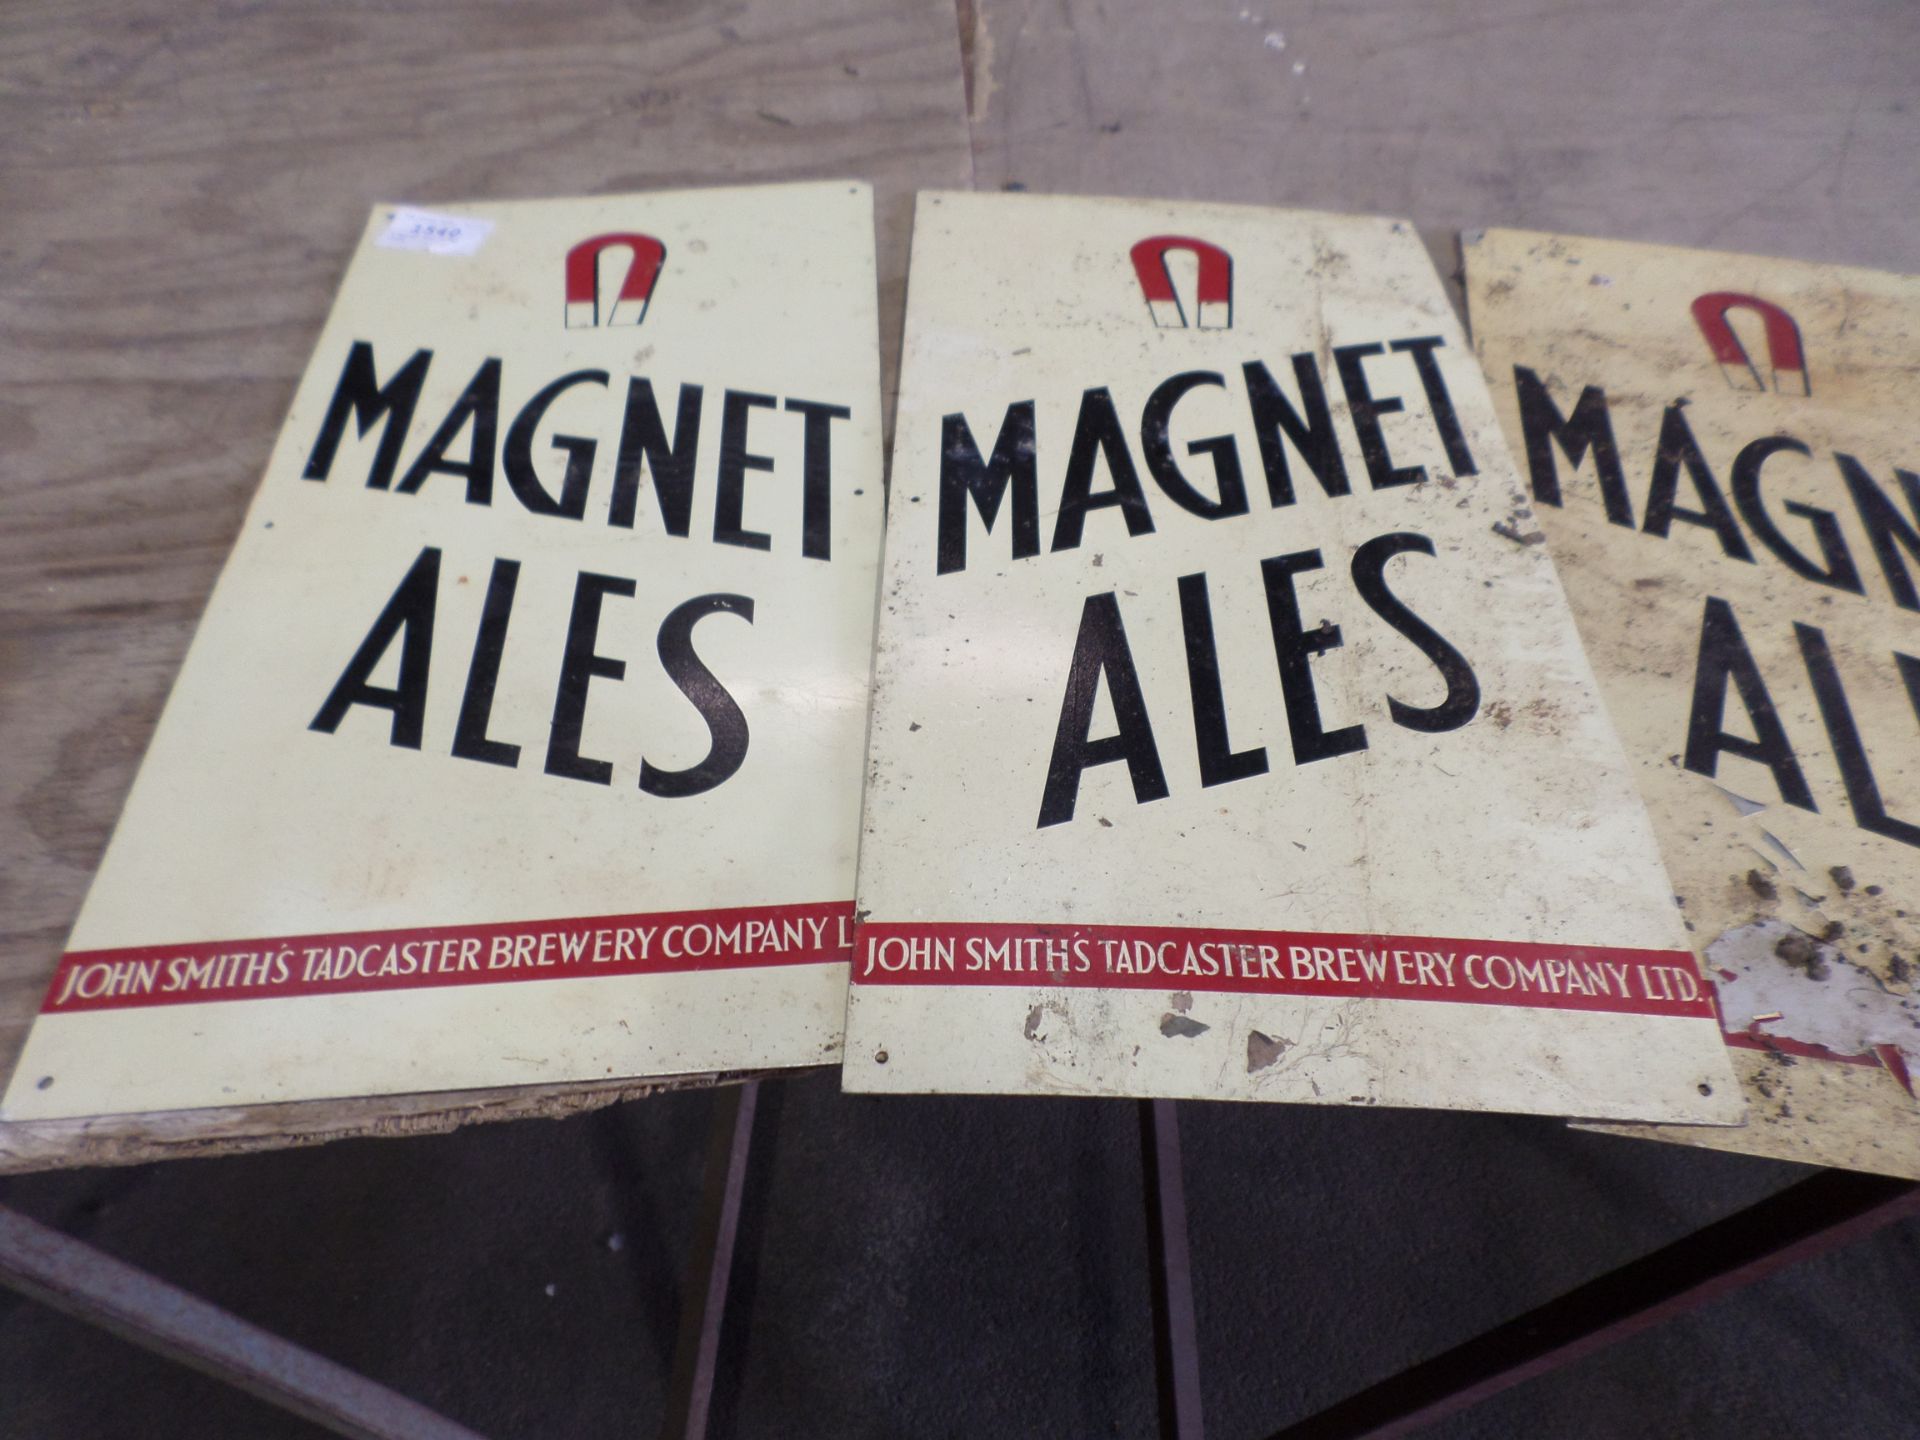 5 Magnet Ales metal signs - Image 3 of 3